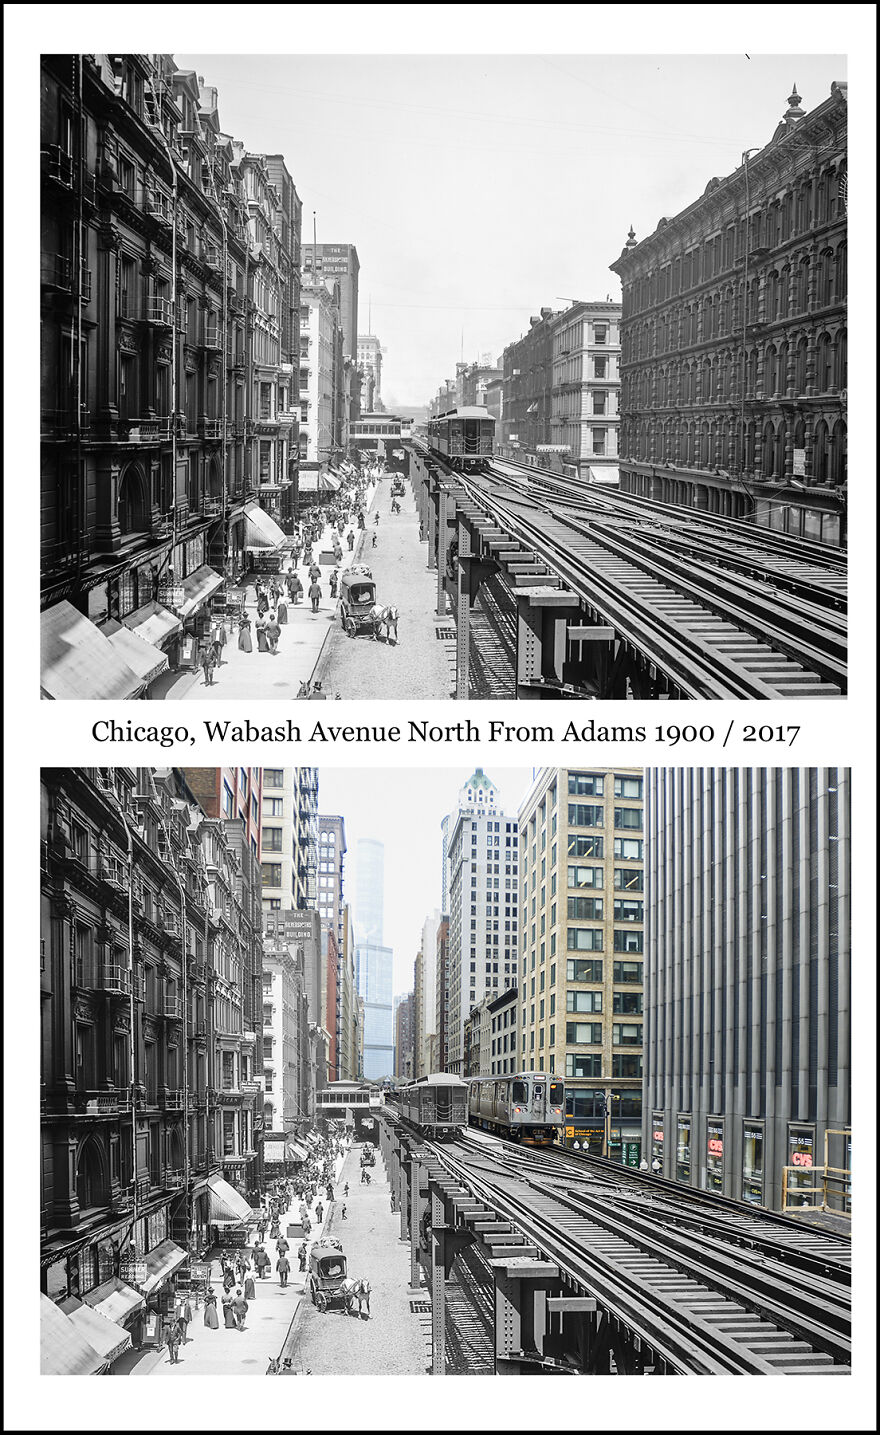 Chicago, Wabash Avenue North From Adams 1900 / 2017